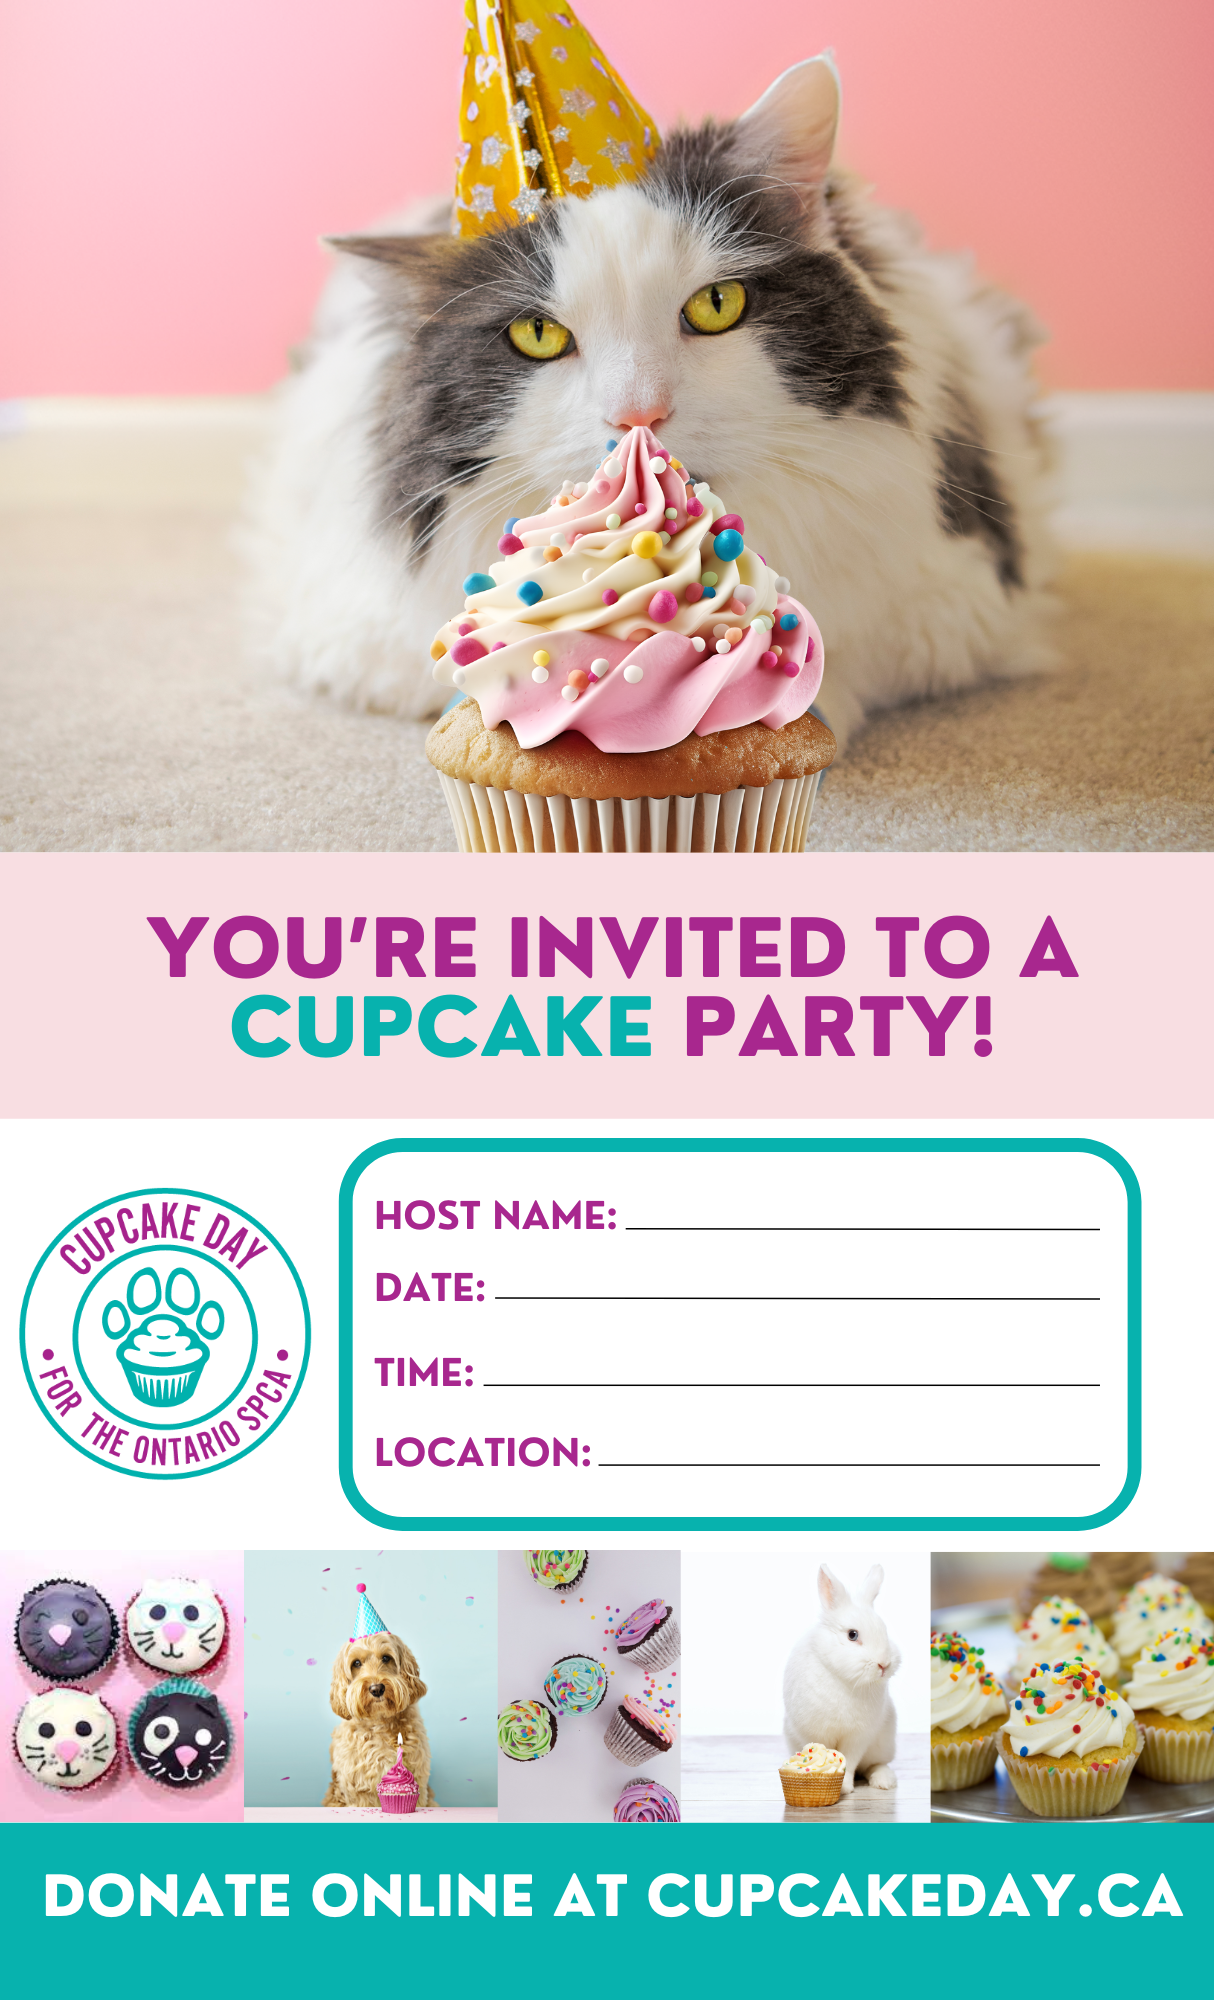 Cupcake Day Party Invite 1